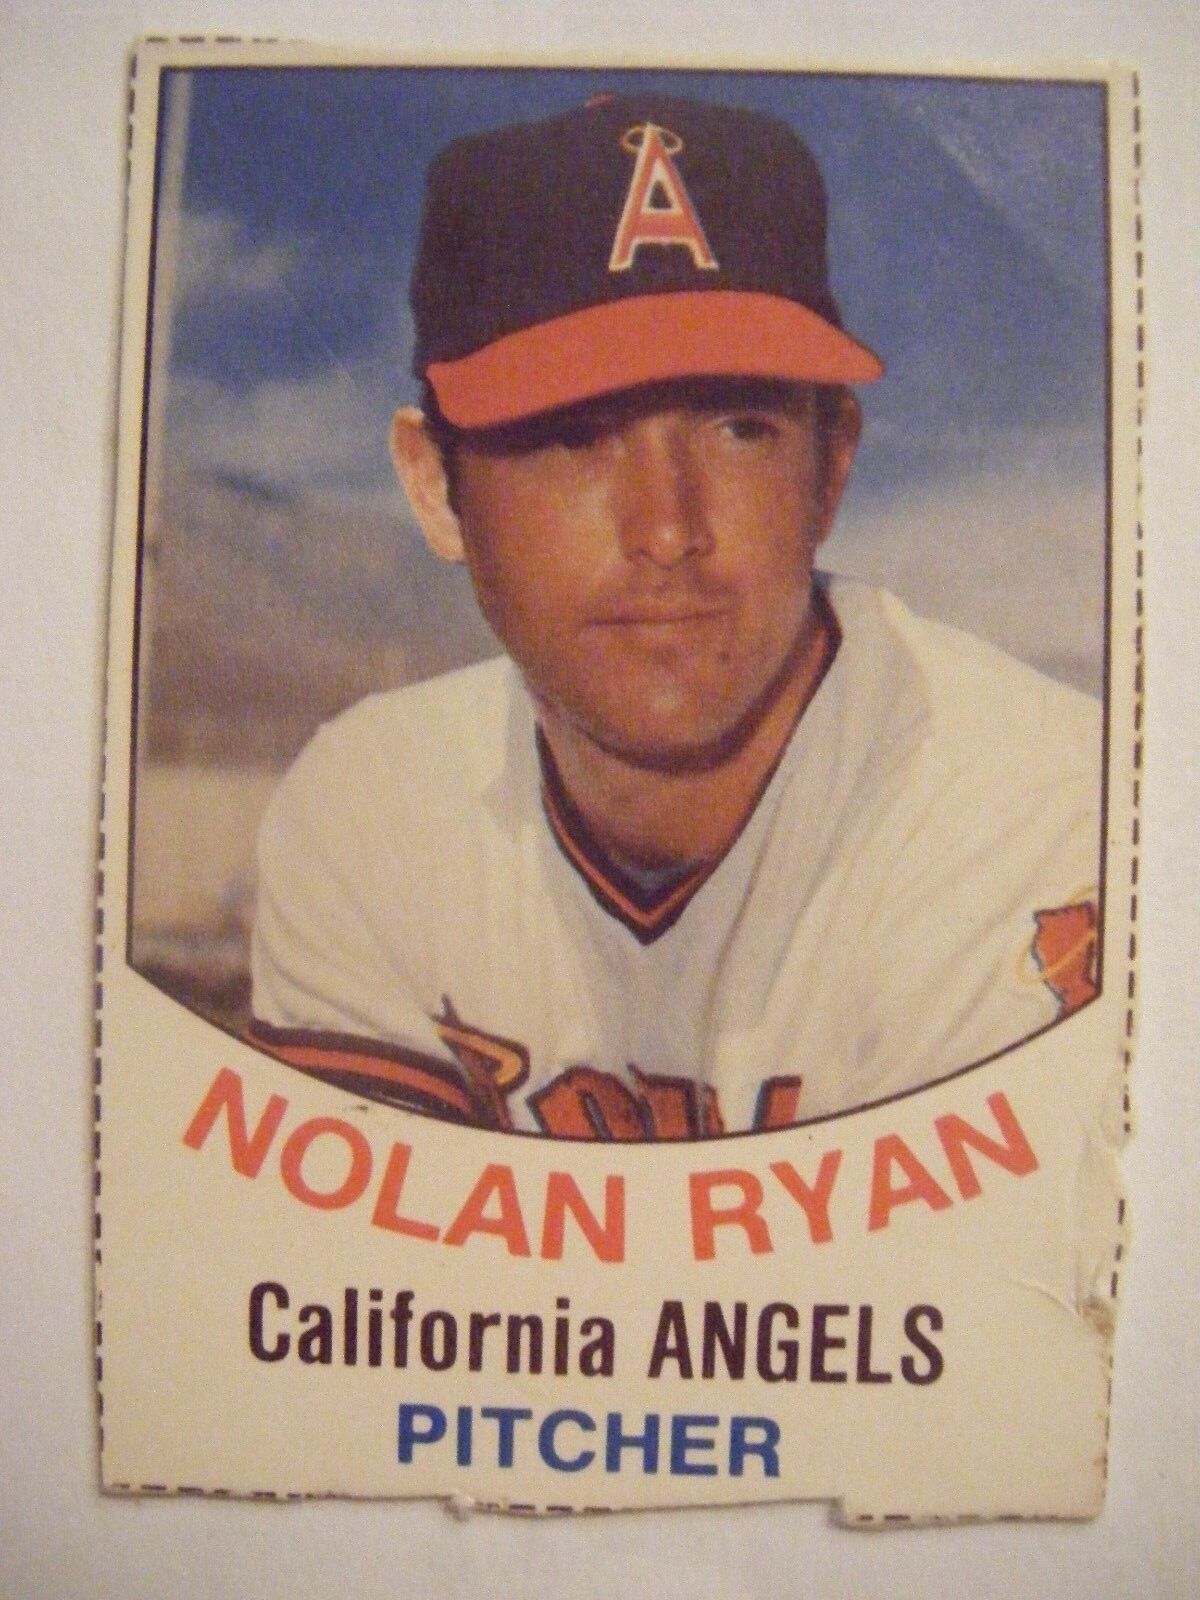 NOLAN RYAN ANGELS 1977 Hostess baseball card #81 1969 WSC METS RANGERS ALVIN TX